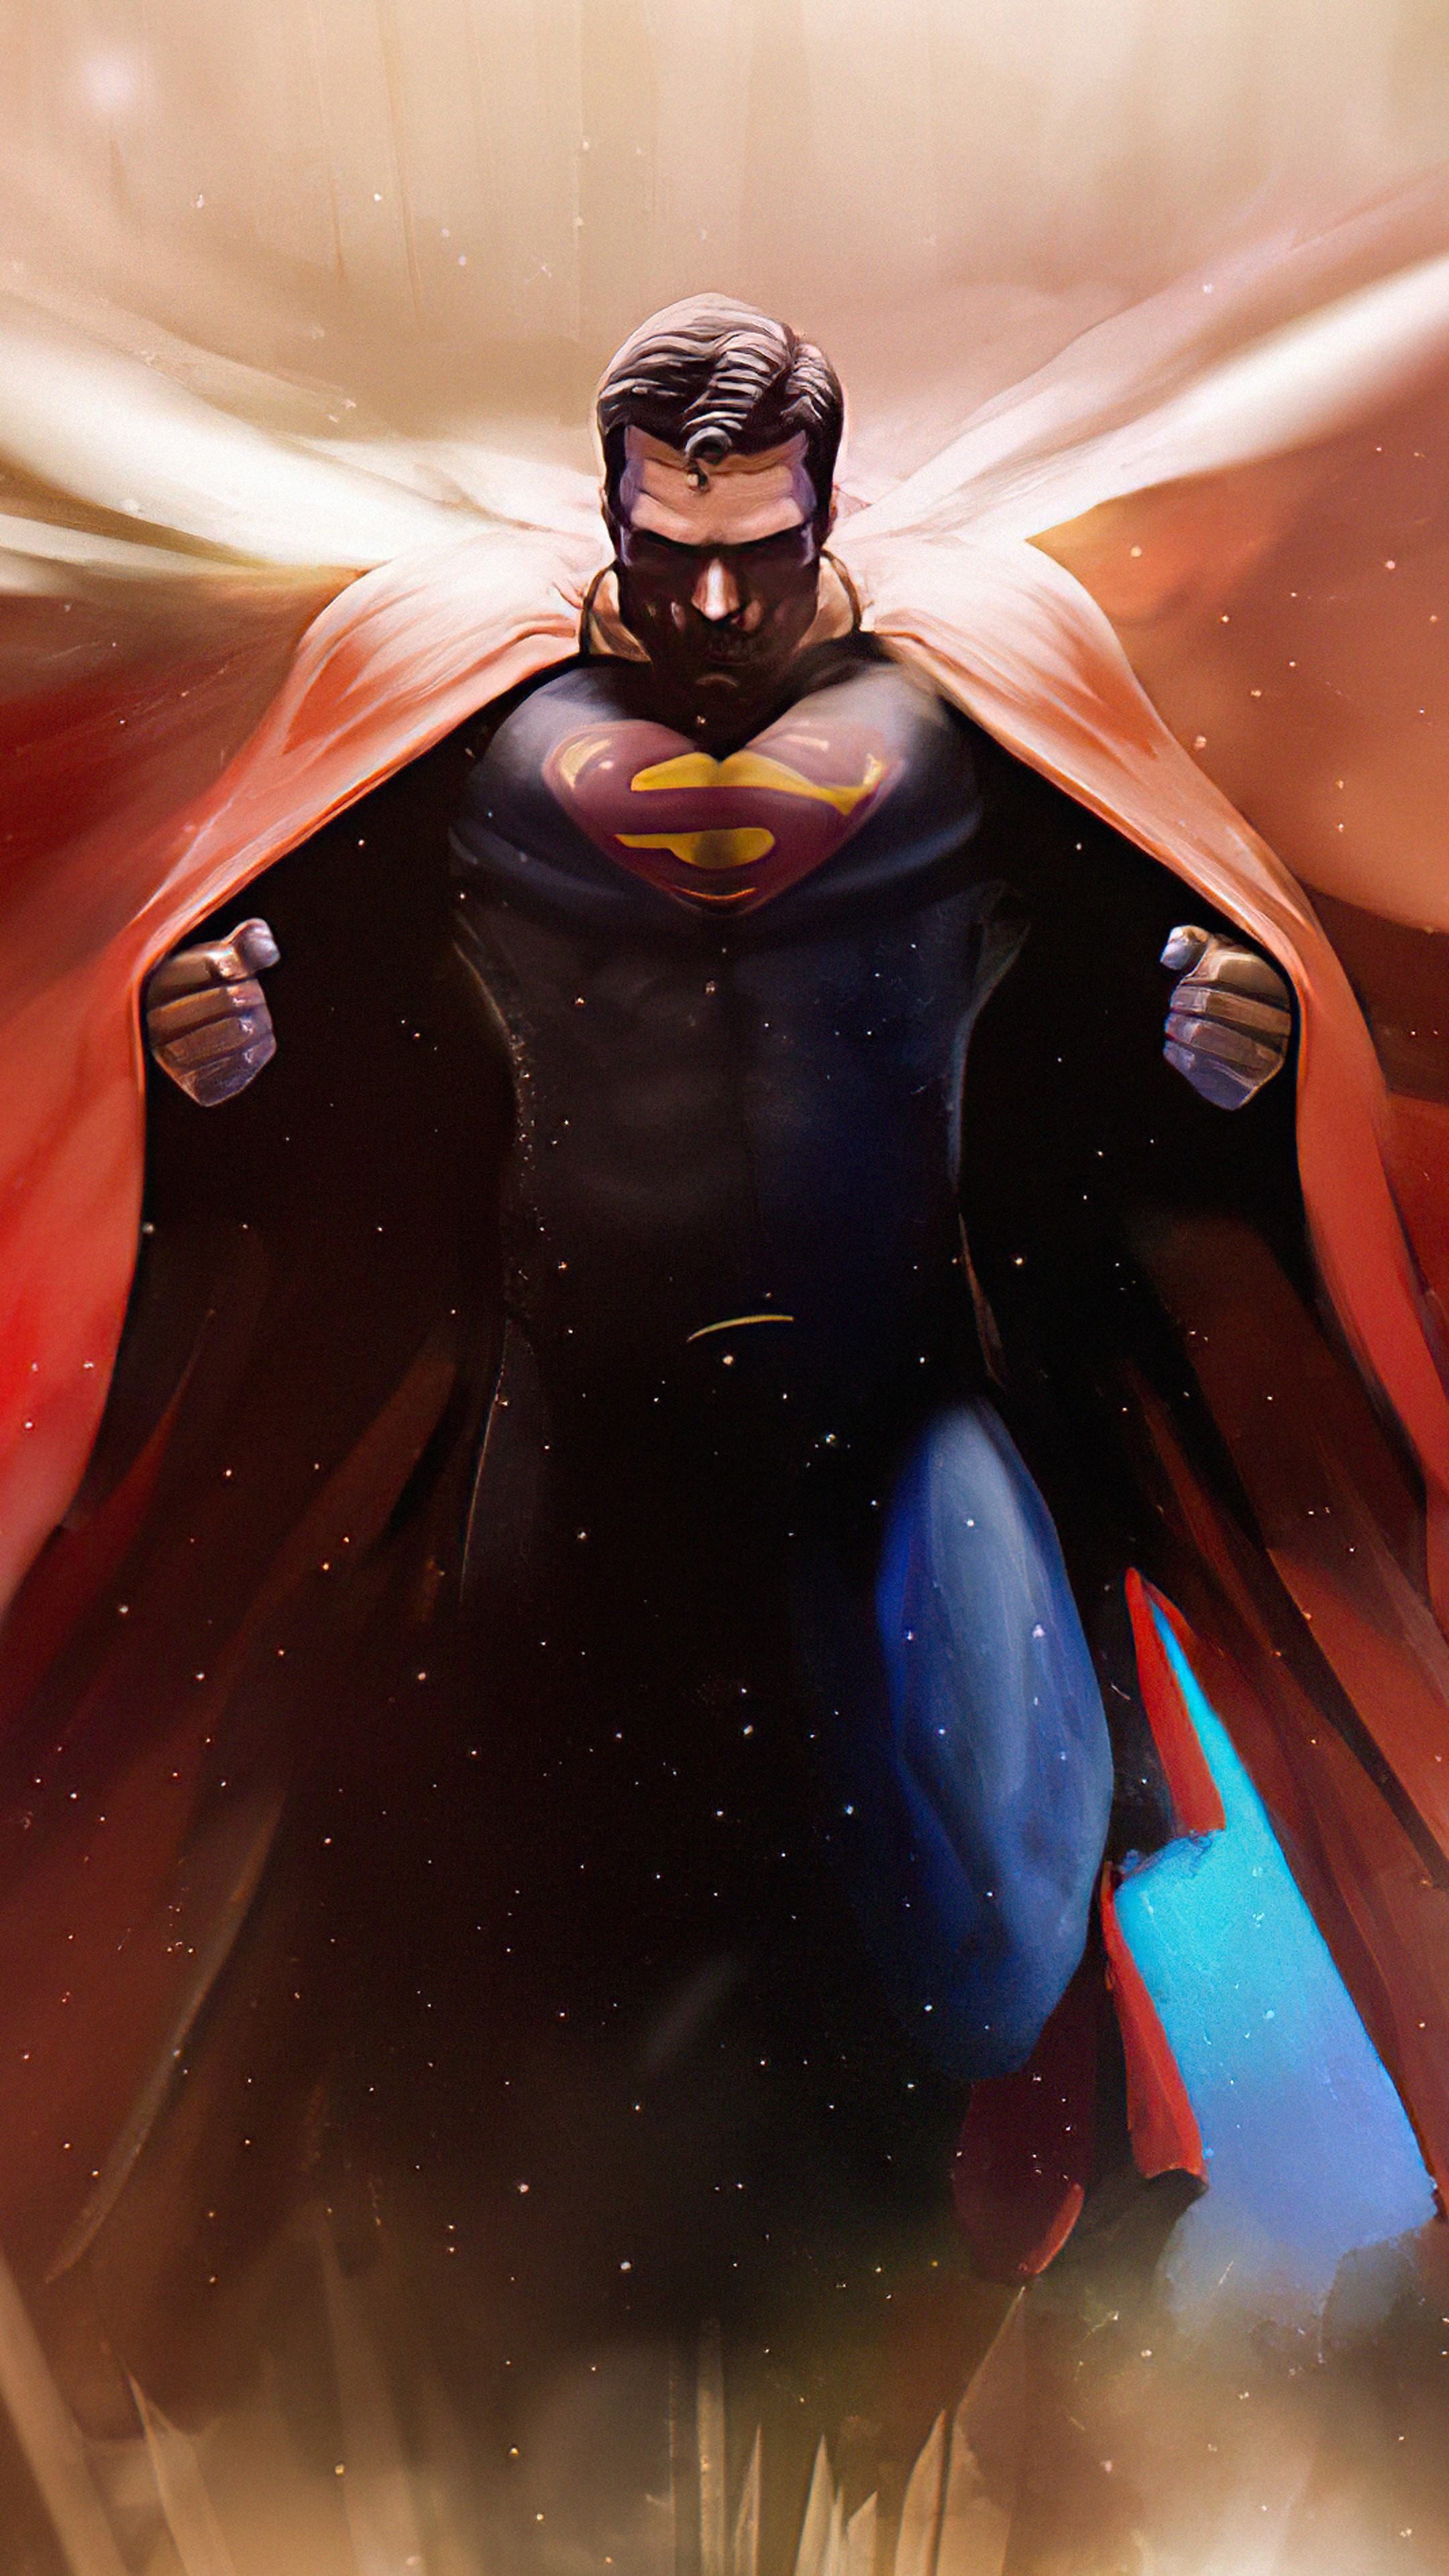 Superman superhero artwork, Sony Xperia edition, 2160x3840 4K Phone